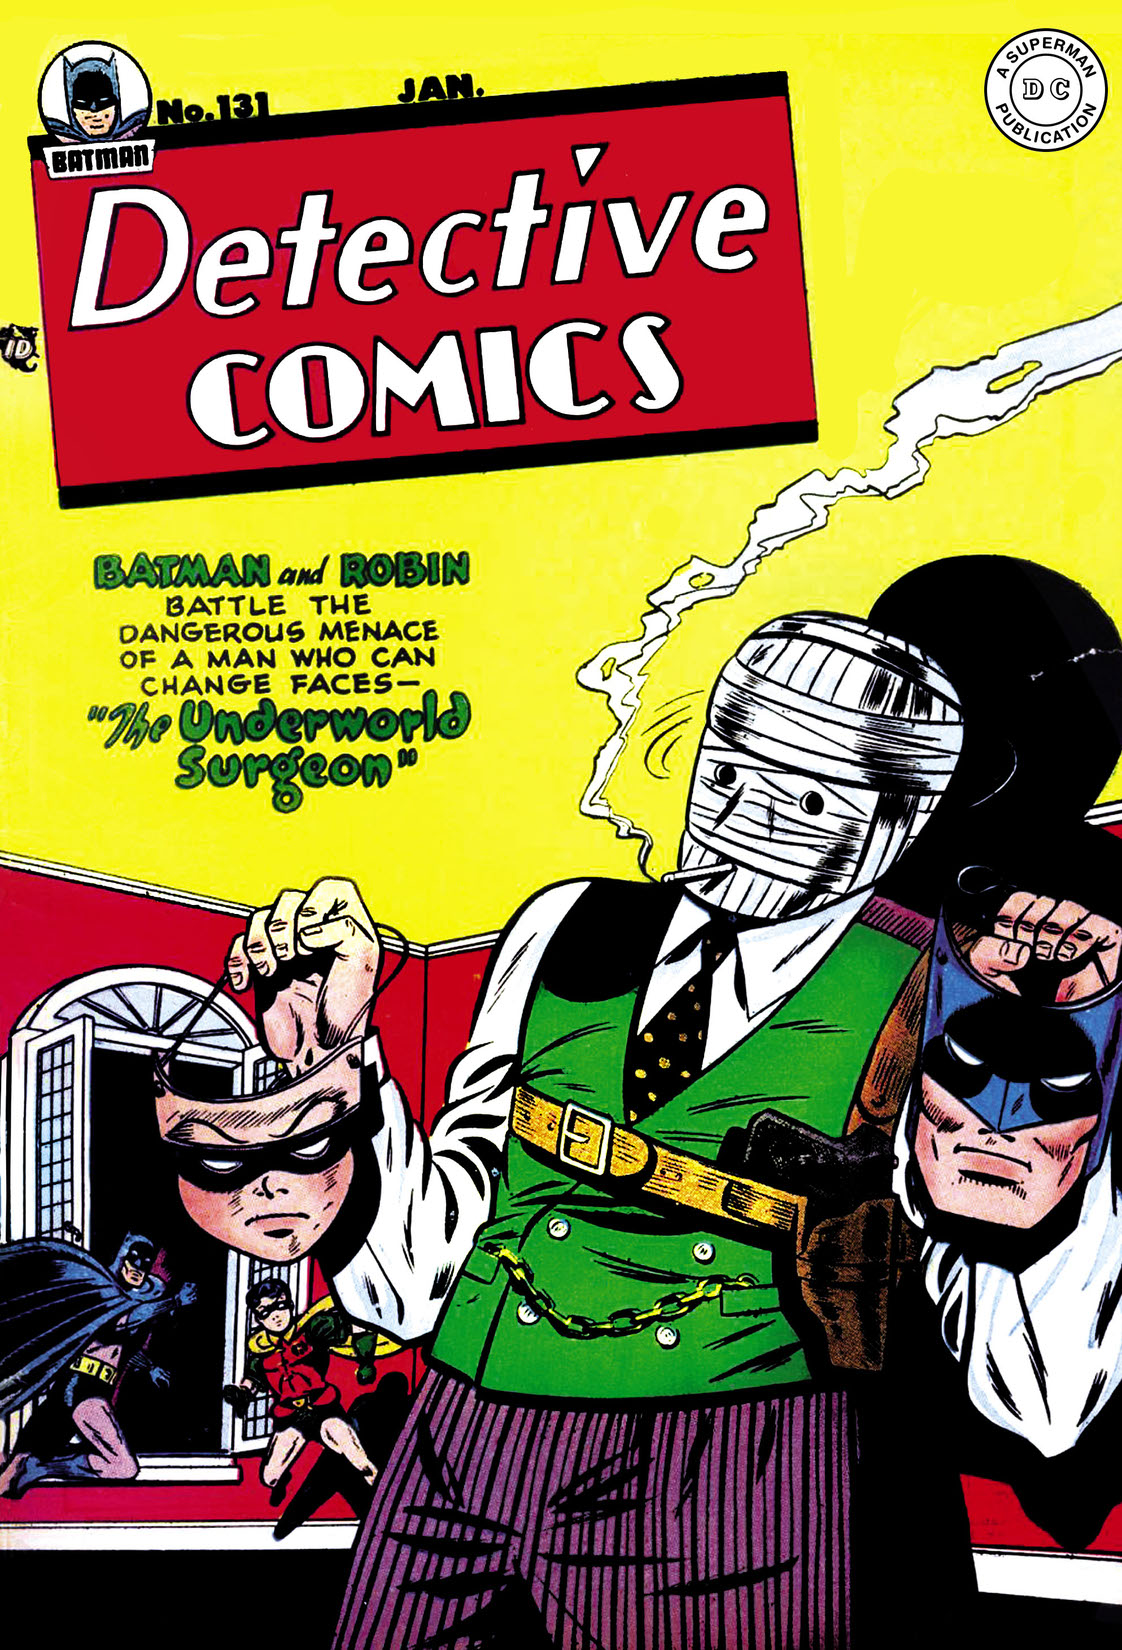 Detective Comics (1937-) #131 preview images